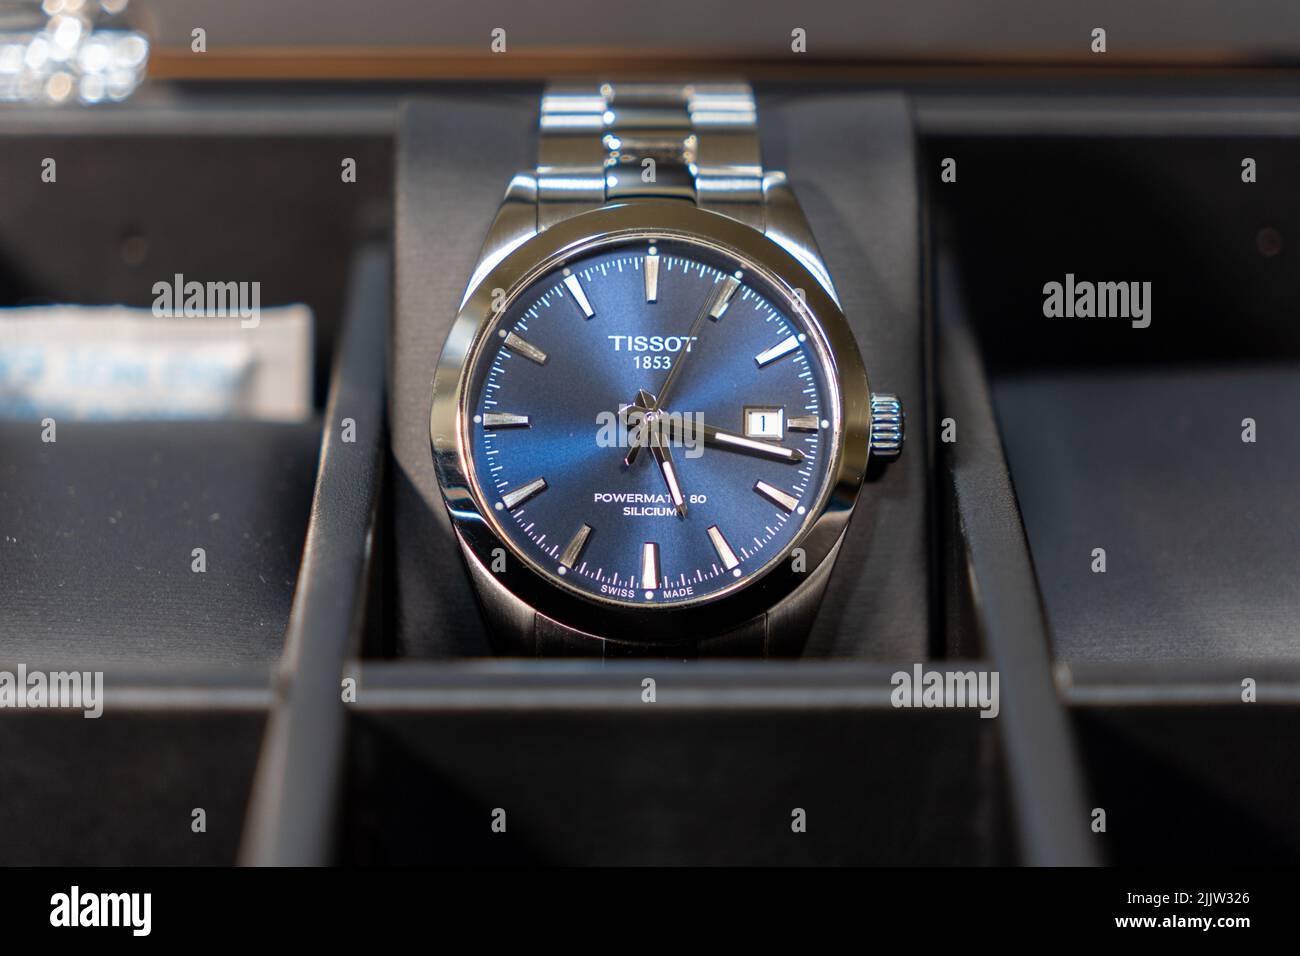 Die Tissot Gentleman Powermatic 80 Silicium Armbanduhr Stockfoto